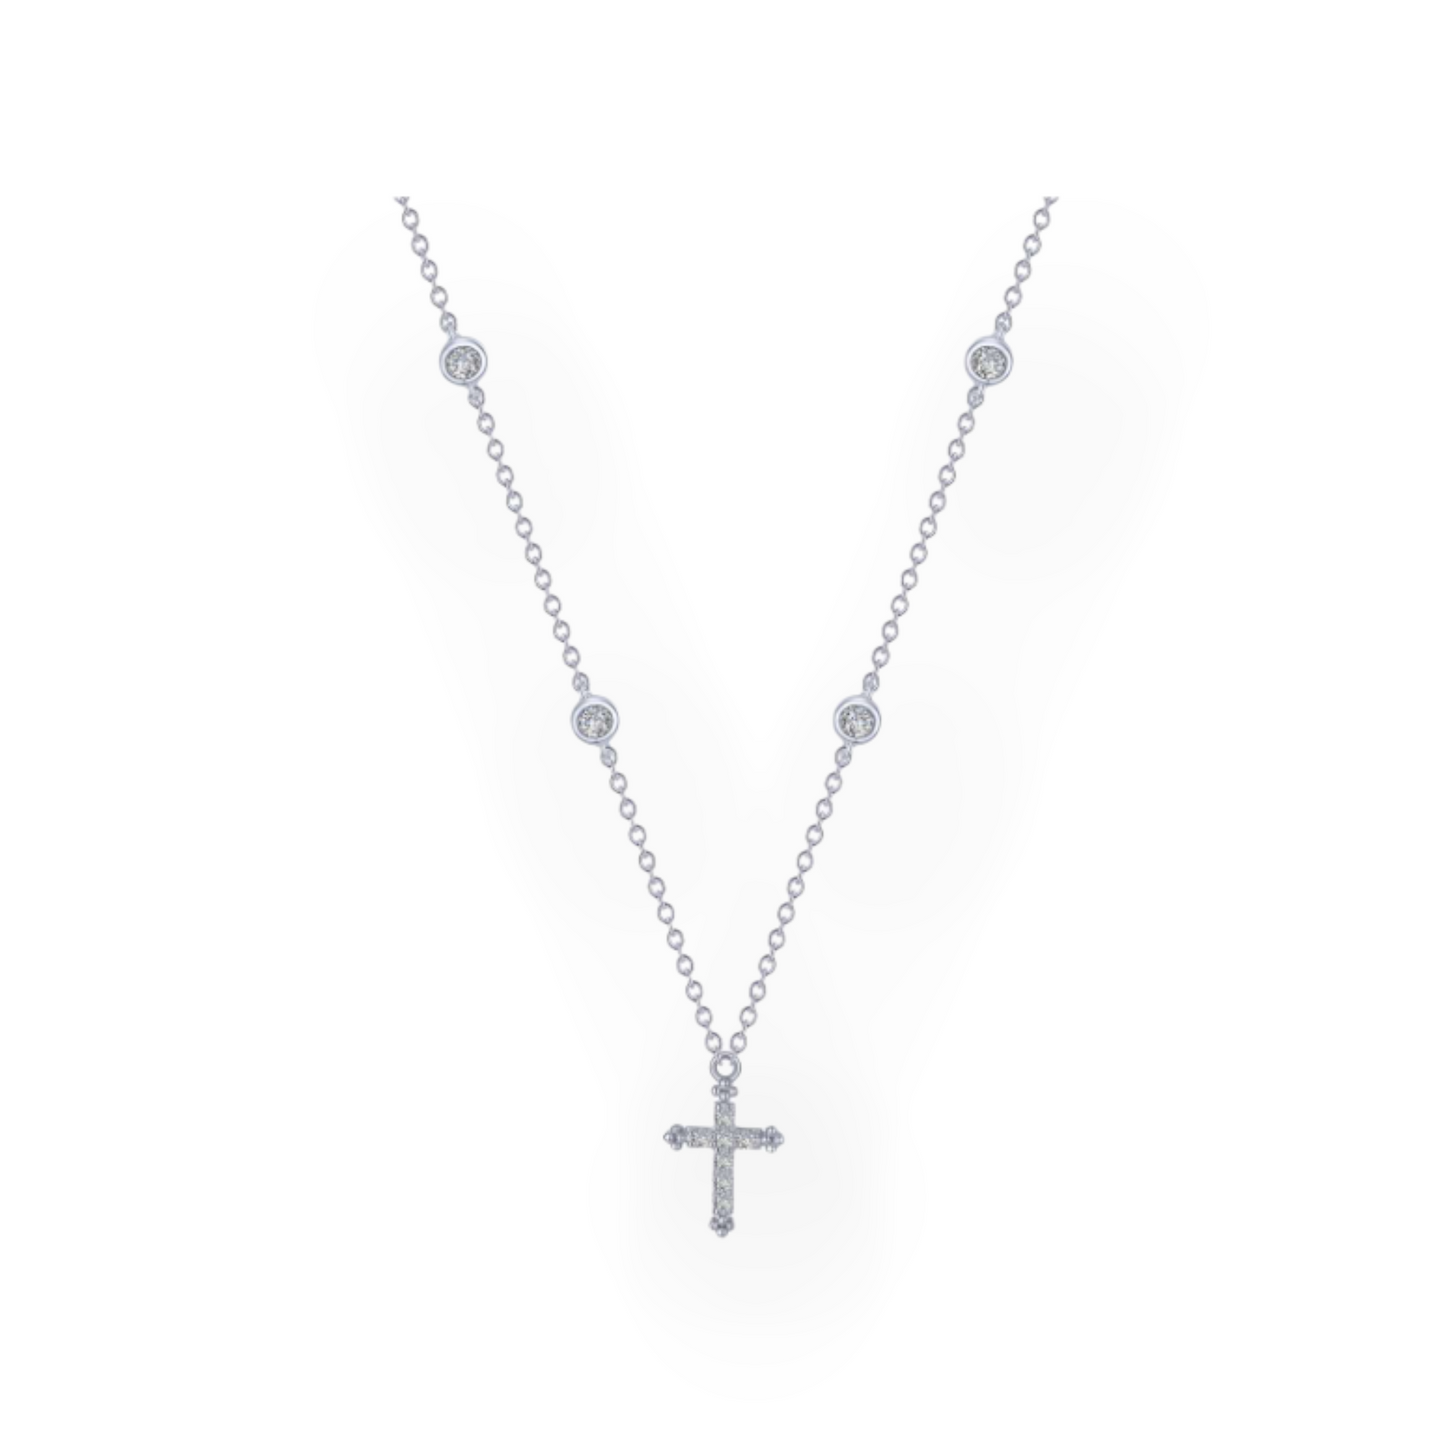 Lafonn Cross Necklace